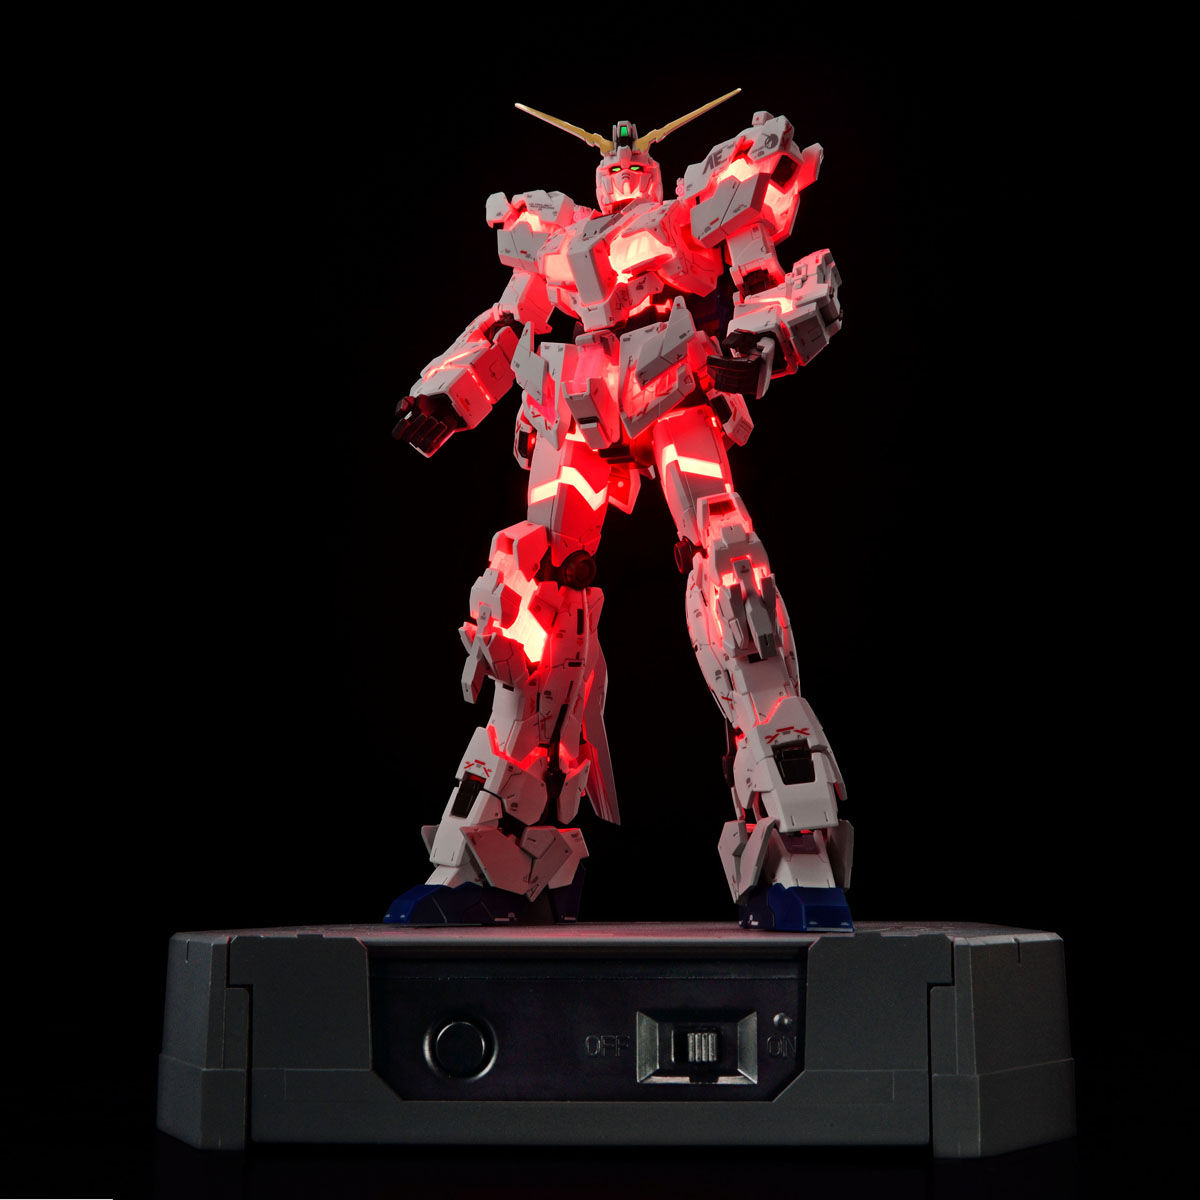 RG 1/144 RX-0 Unicorn Gundam[Destory Mode](Tokyo Waterfront City Lighting Model Ver.)